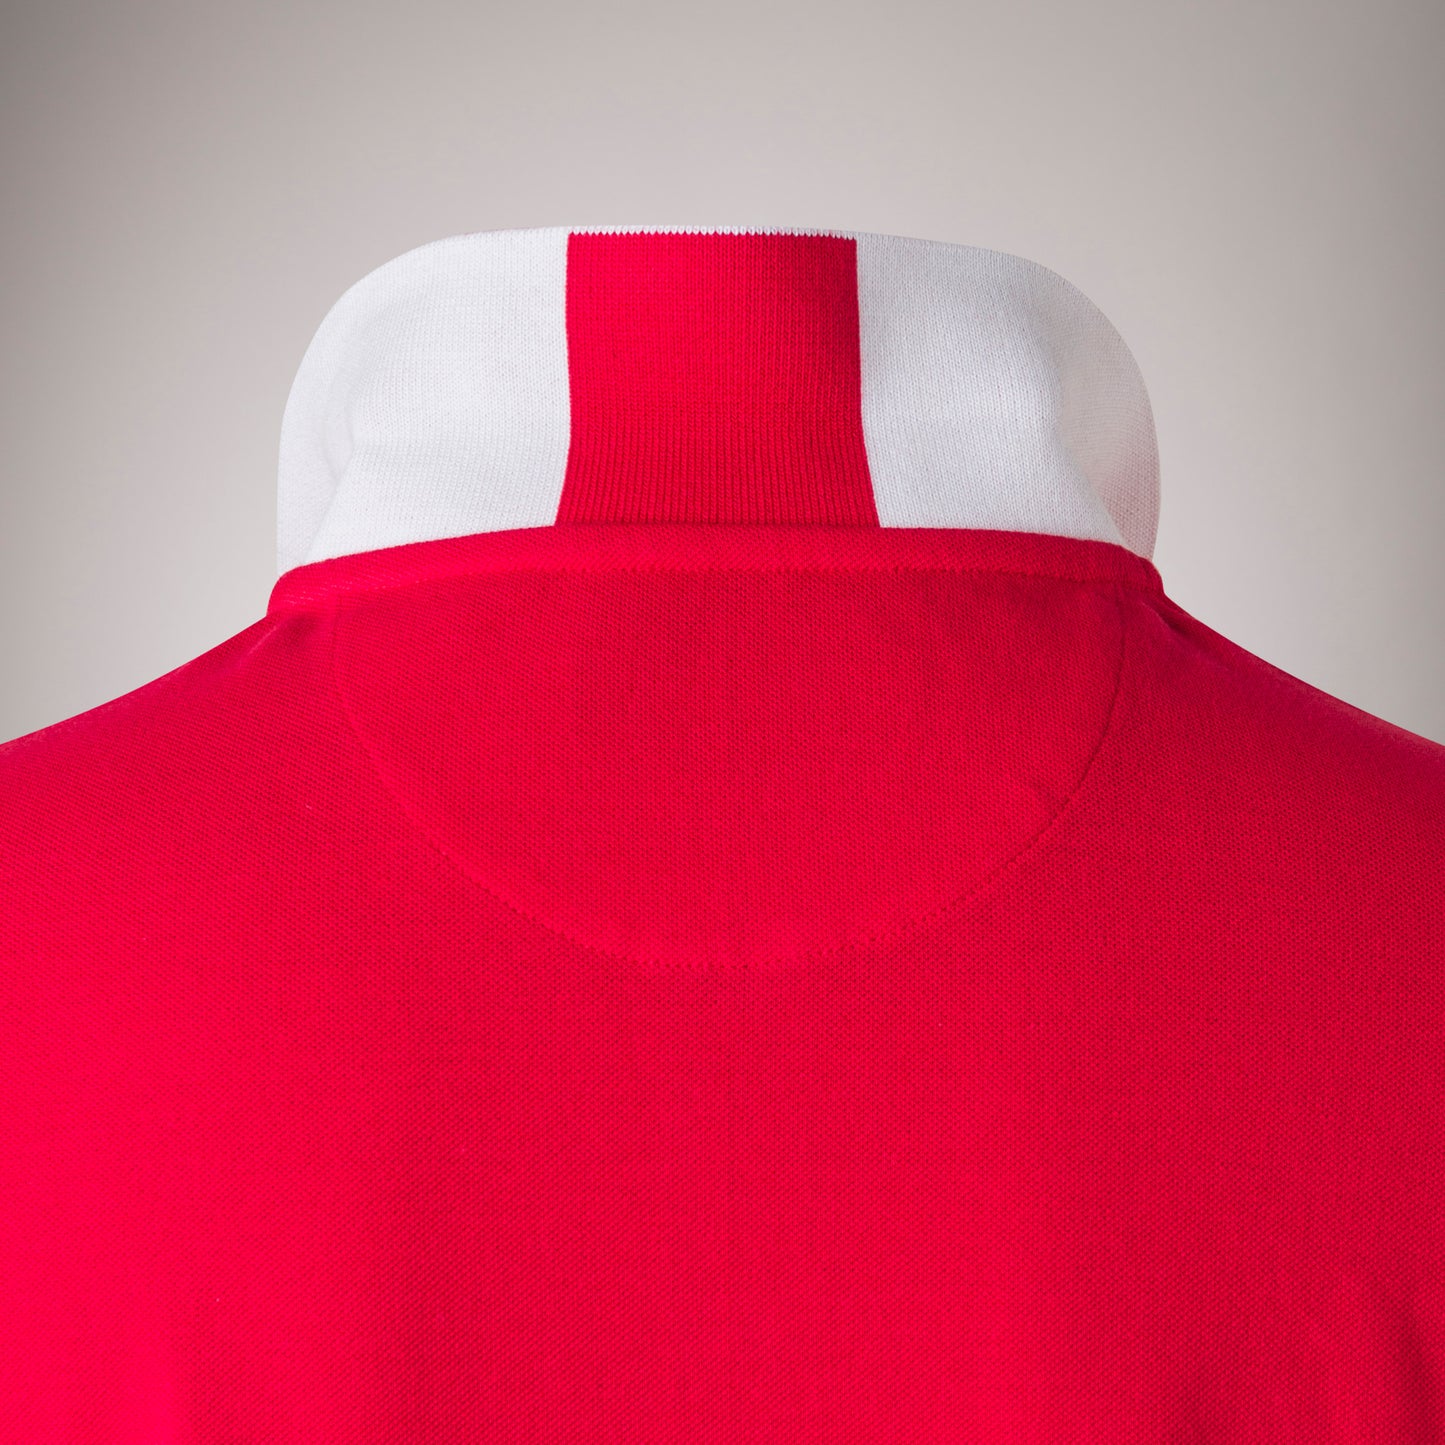 Marlboro Classics Bi-Colour Collar Red Polo T-Shirt